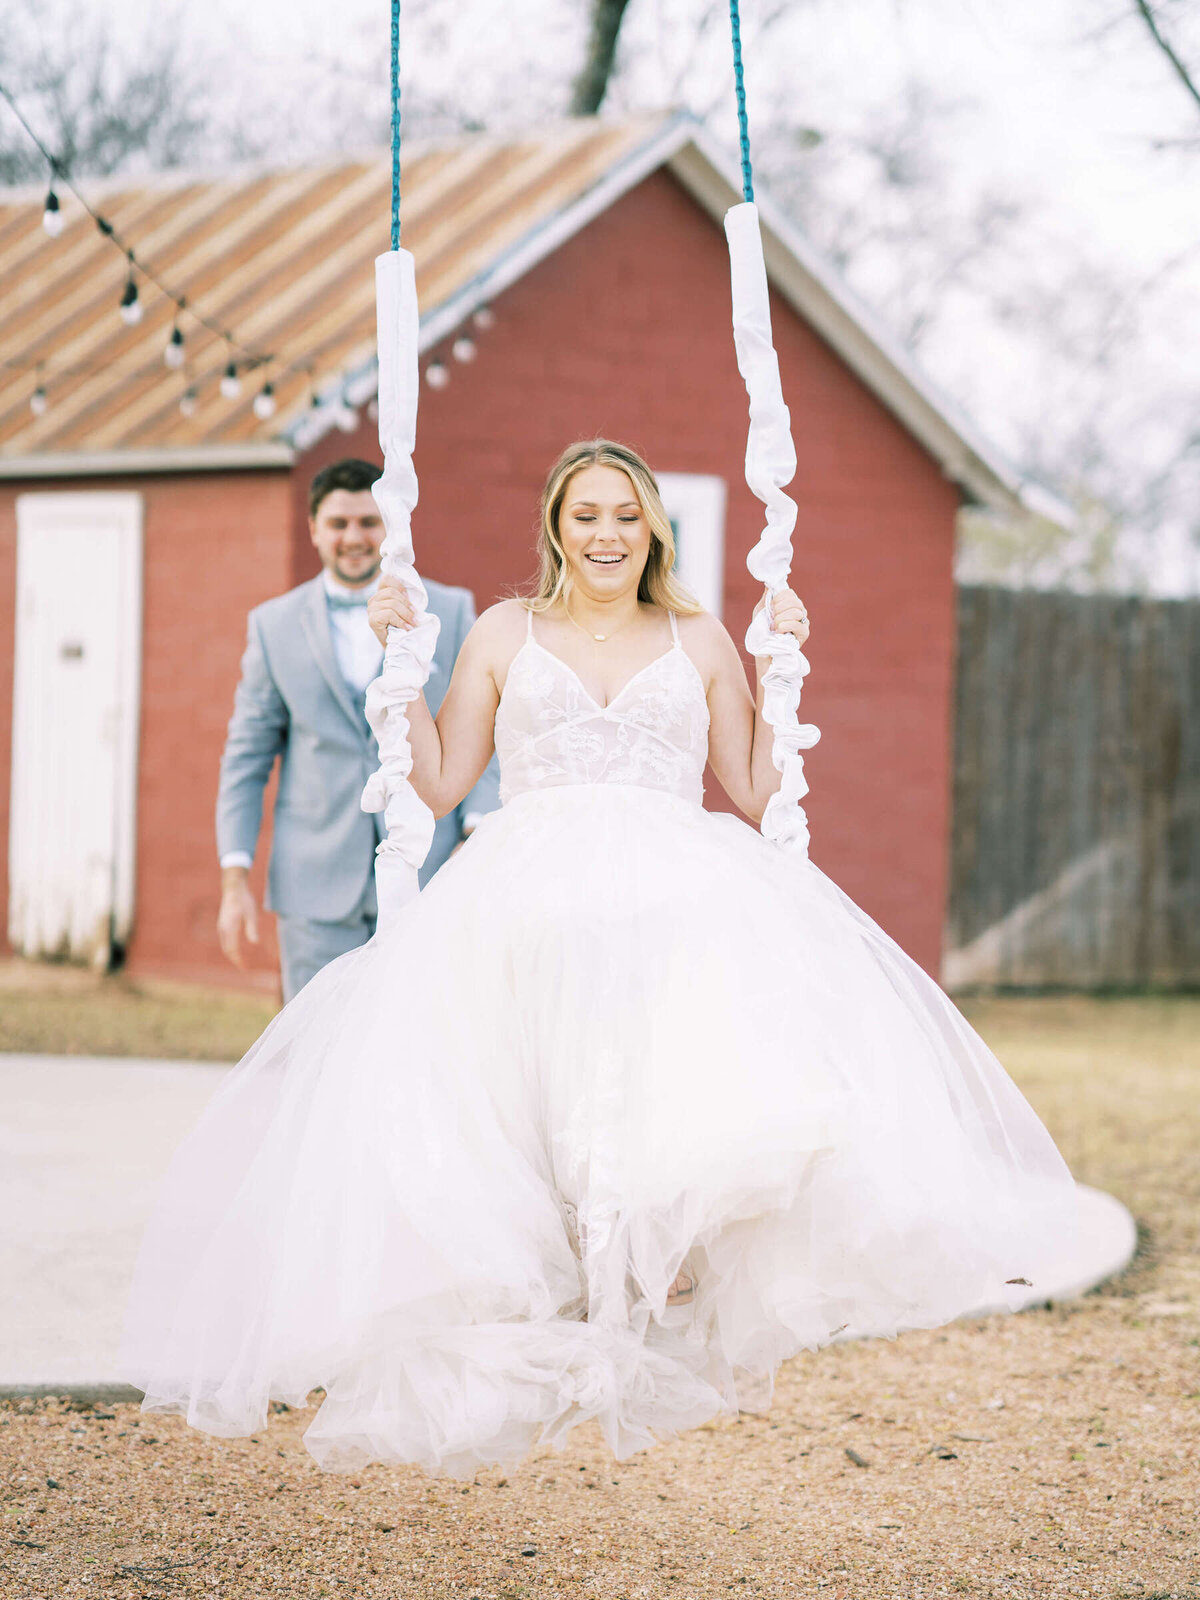 Groom pushes bride on outdoor tree swing at elegant rustic wedding in North Texas